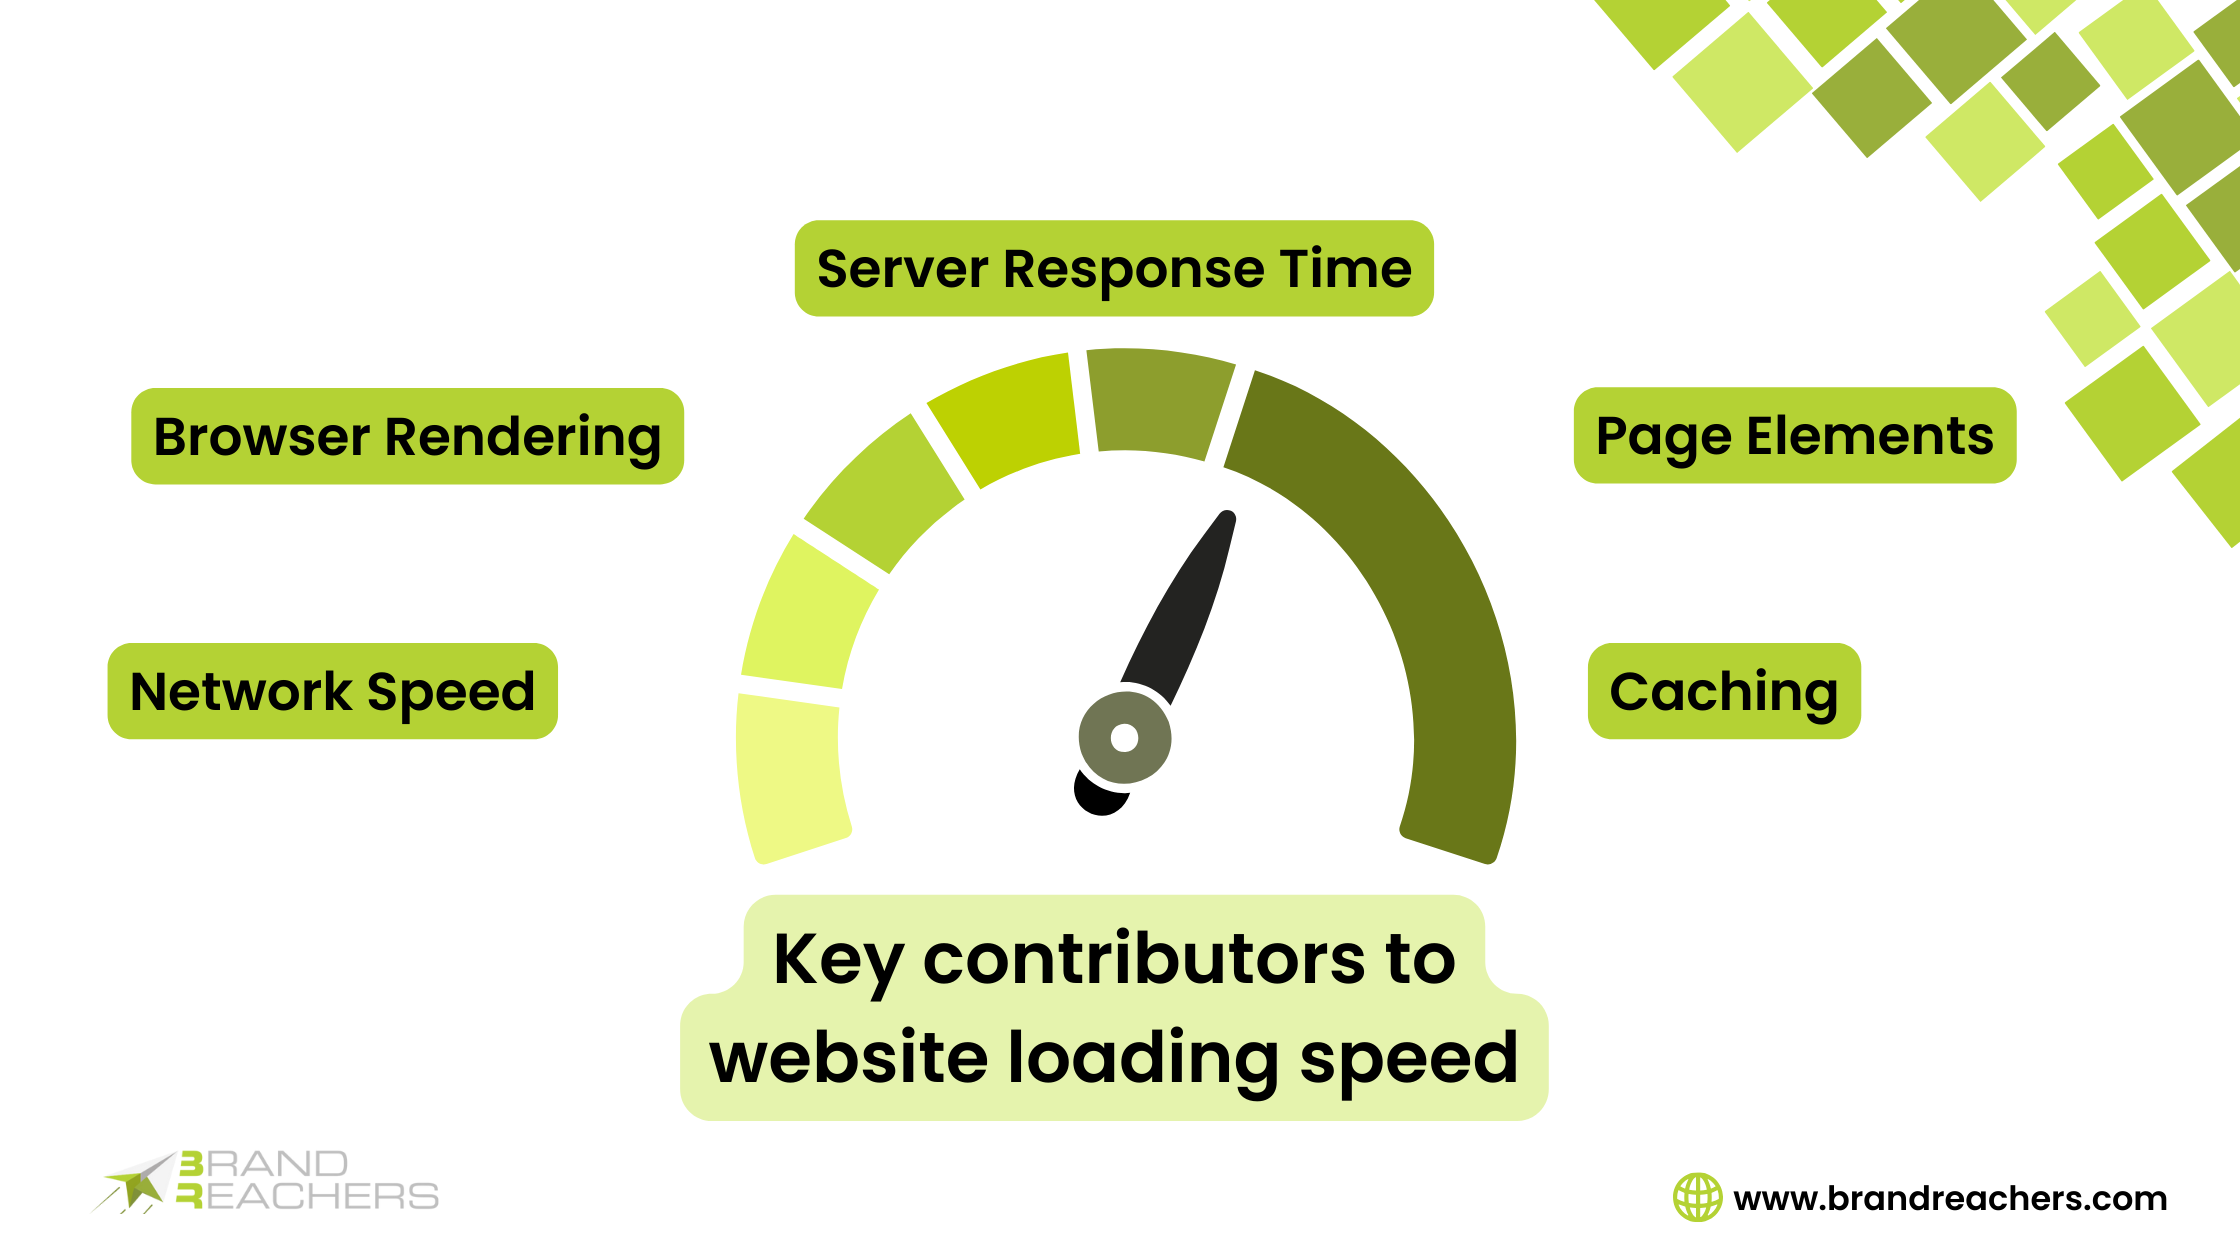 Key contributors of website loading speed